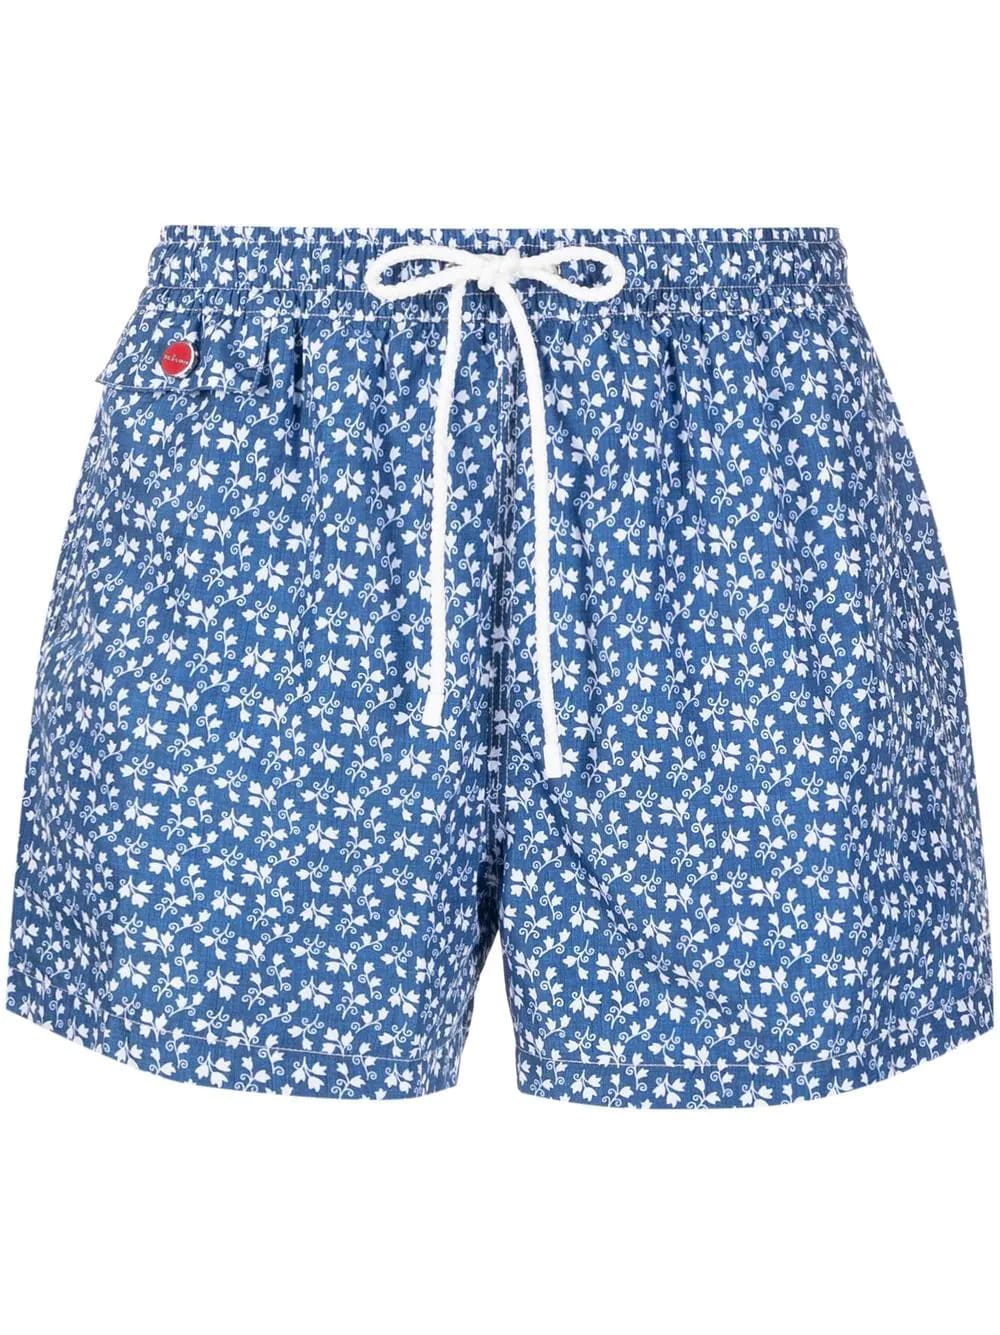 Kiton Navy Blue Swim Shorts With White Micro Floral Print